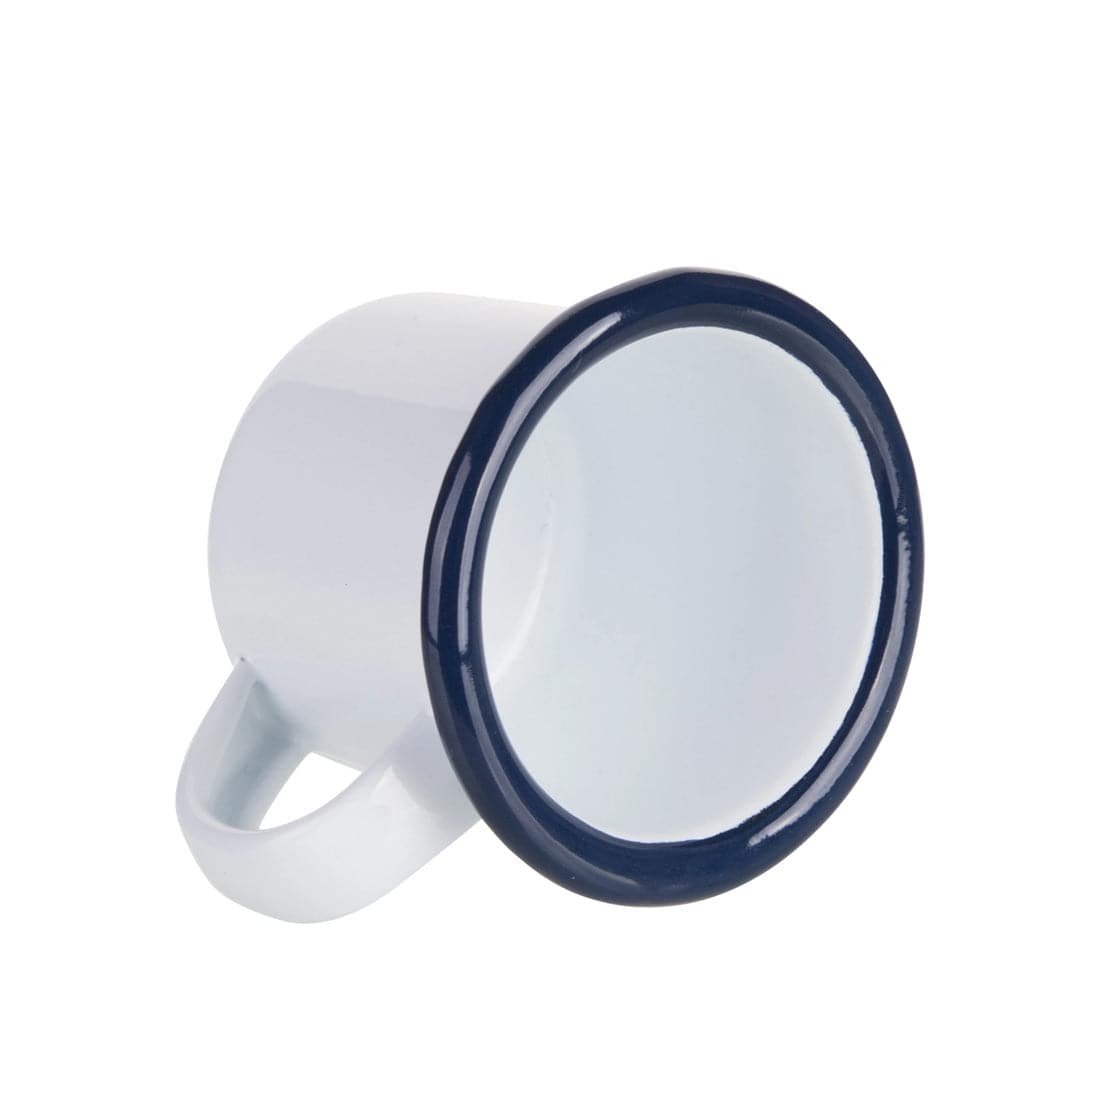 Pearl Coating™ 3oz/100ml Sublimation Enamel Mug with Blue Rim - Pack of 6 - Joto Imaging Supplies US